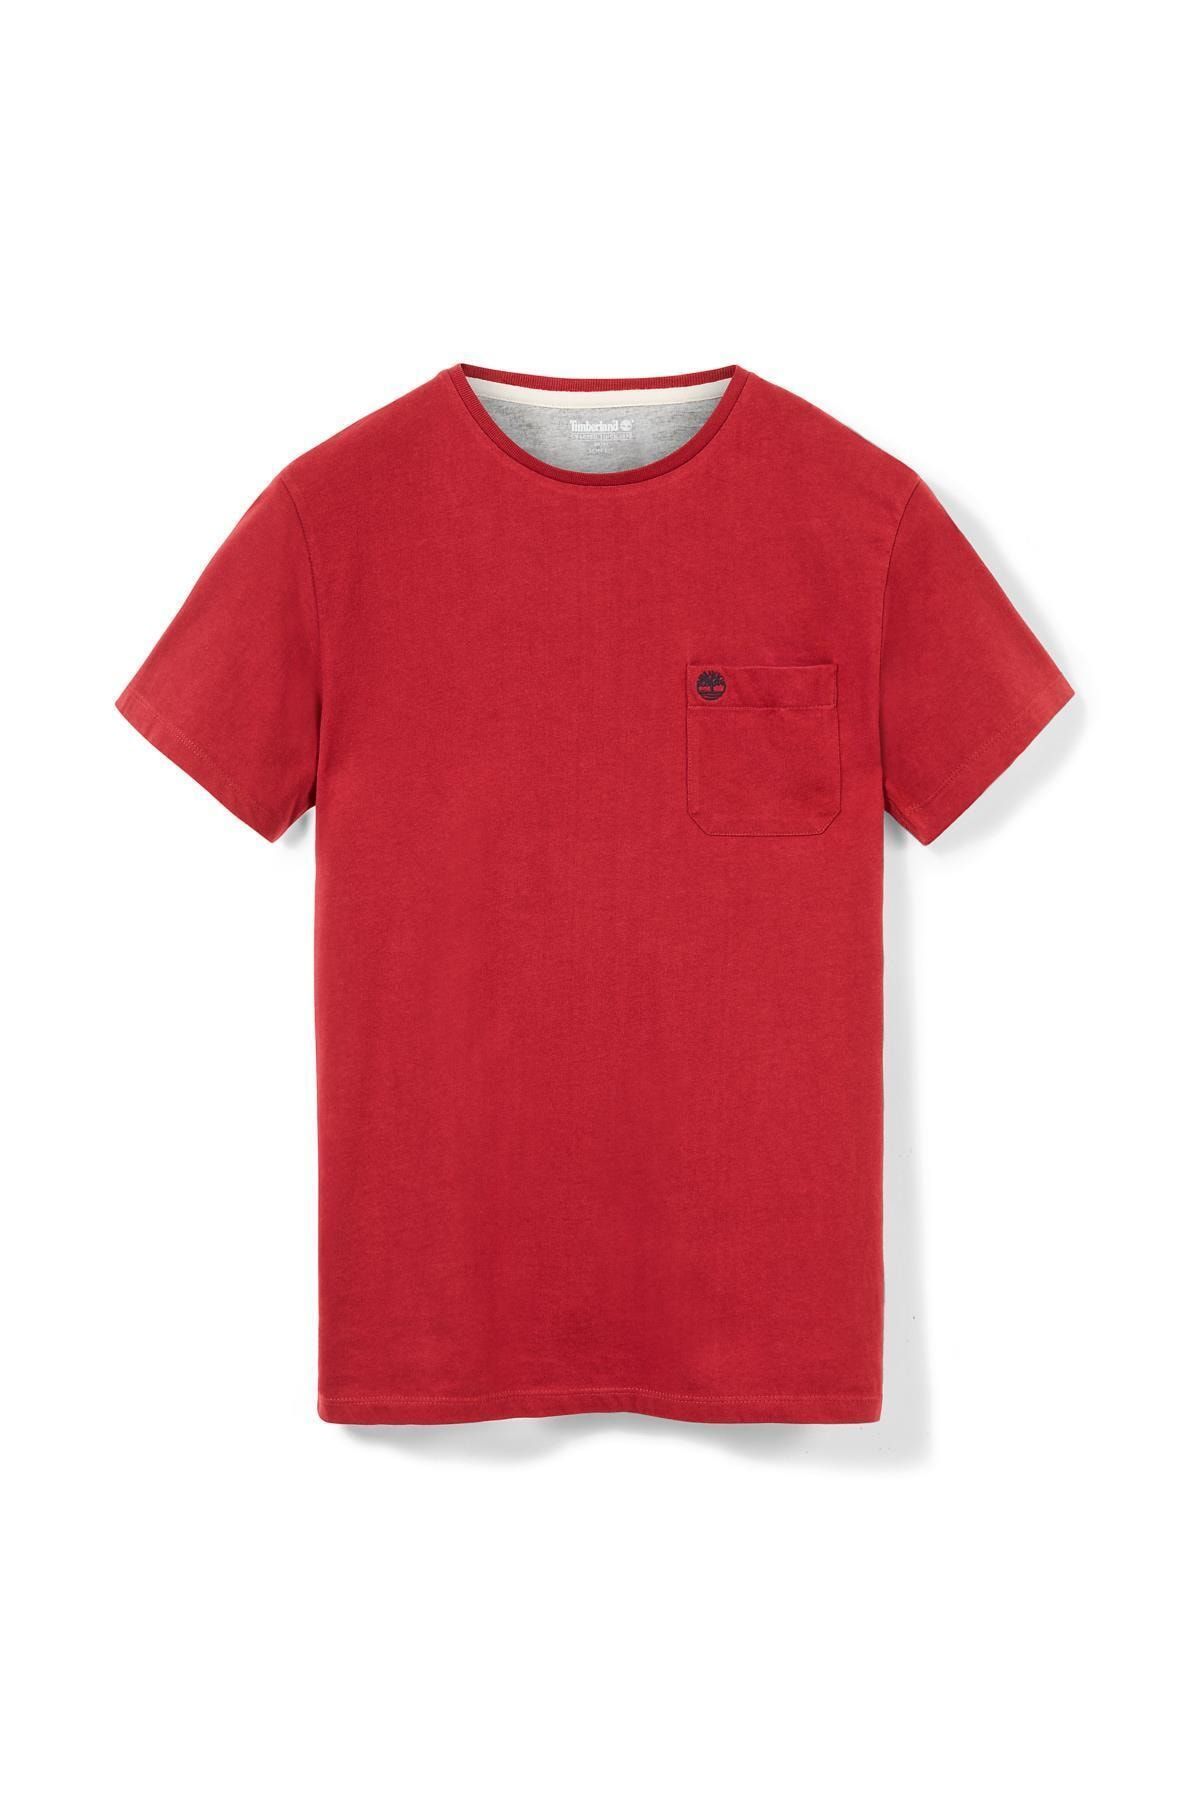 Timberland Dunstan River Pocket Slim Fit Erkek T-shirt Kırmızı